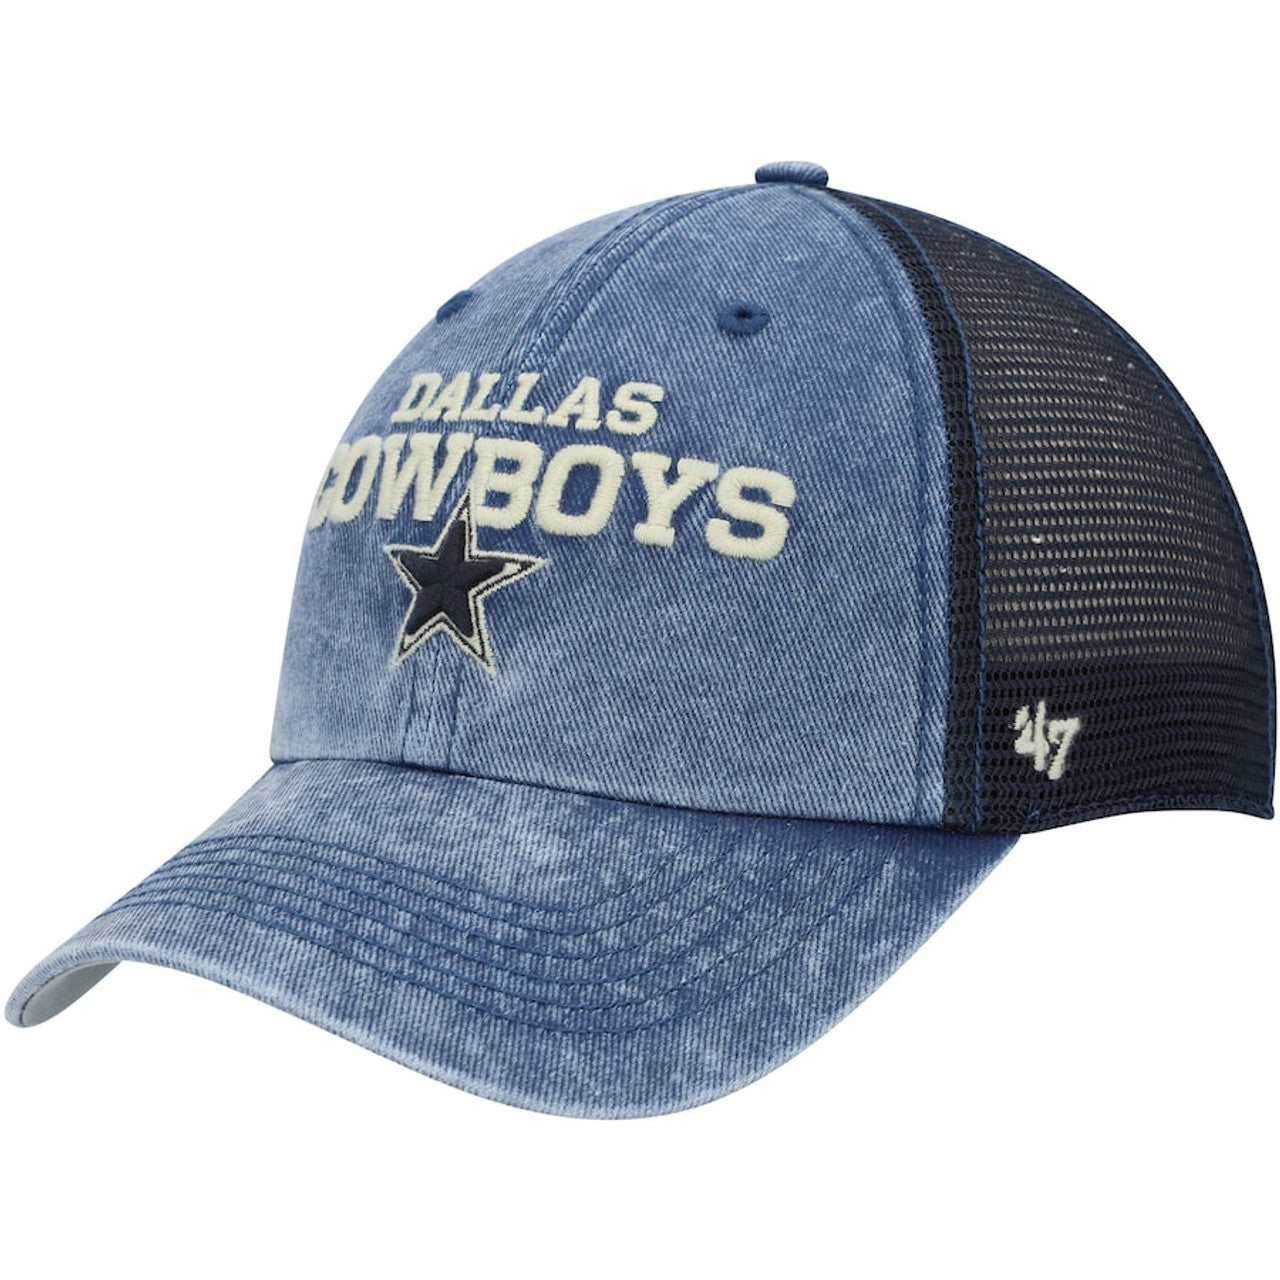 Men's '47 Navy Dallas Cowboys Drumline Trucker Clean Up Snapback Hat